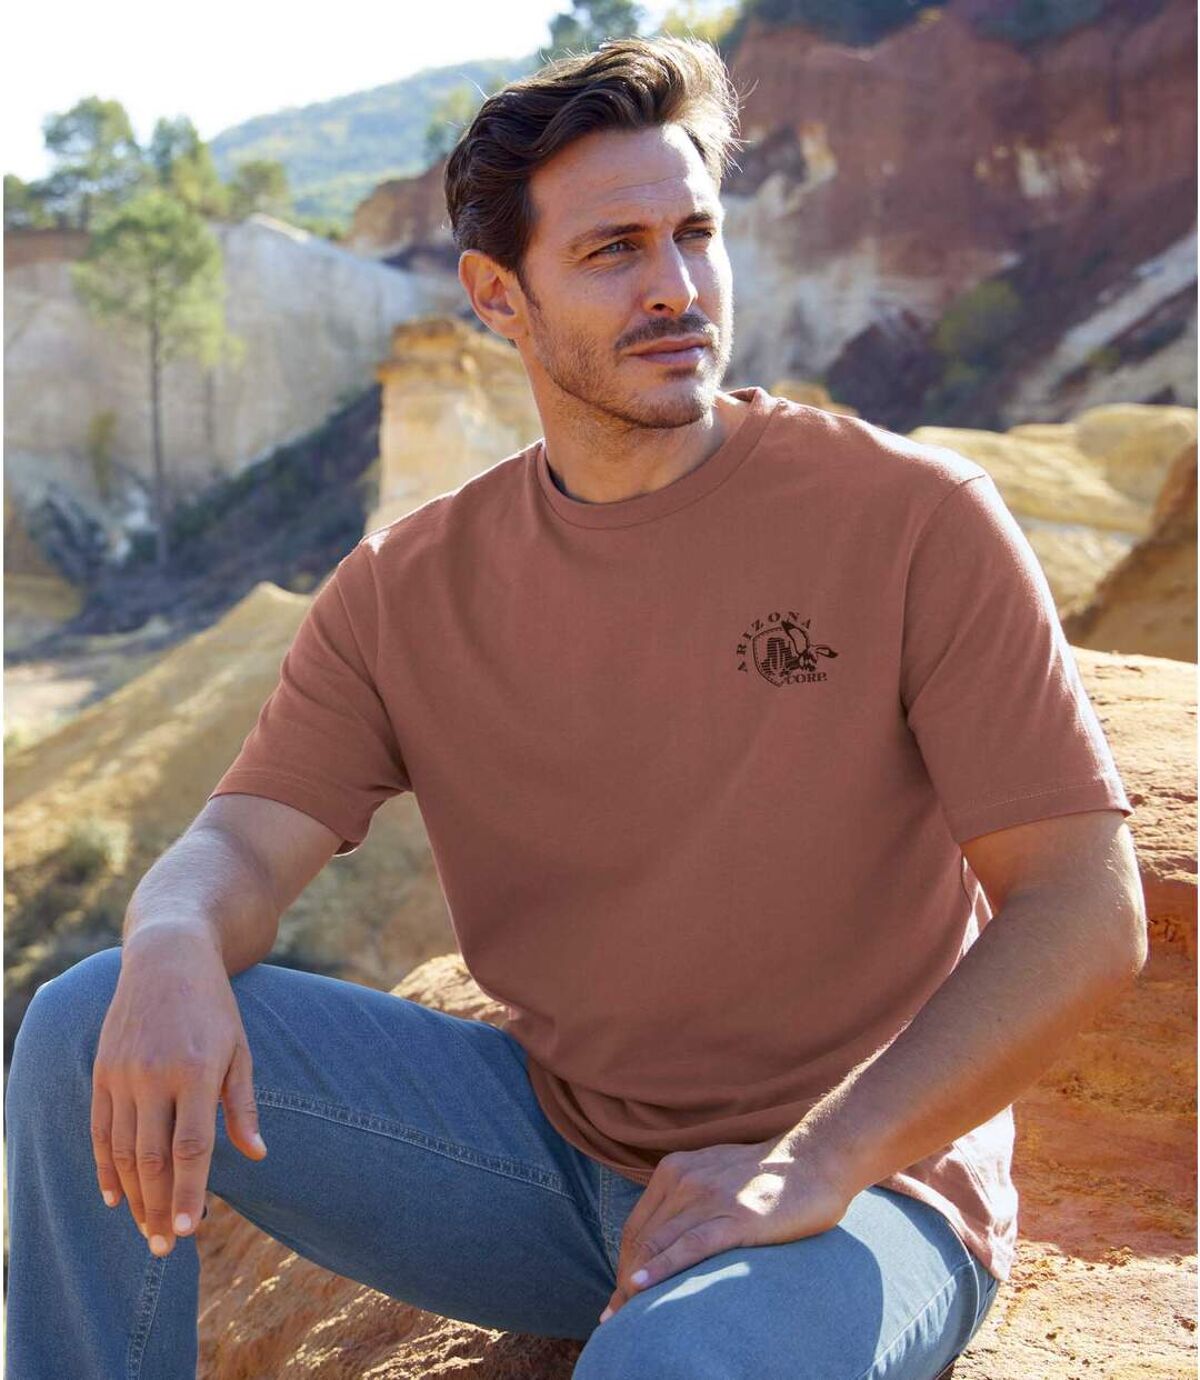 4er-Pack T-Shirts Outdoor Atlas For Men